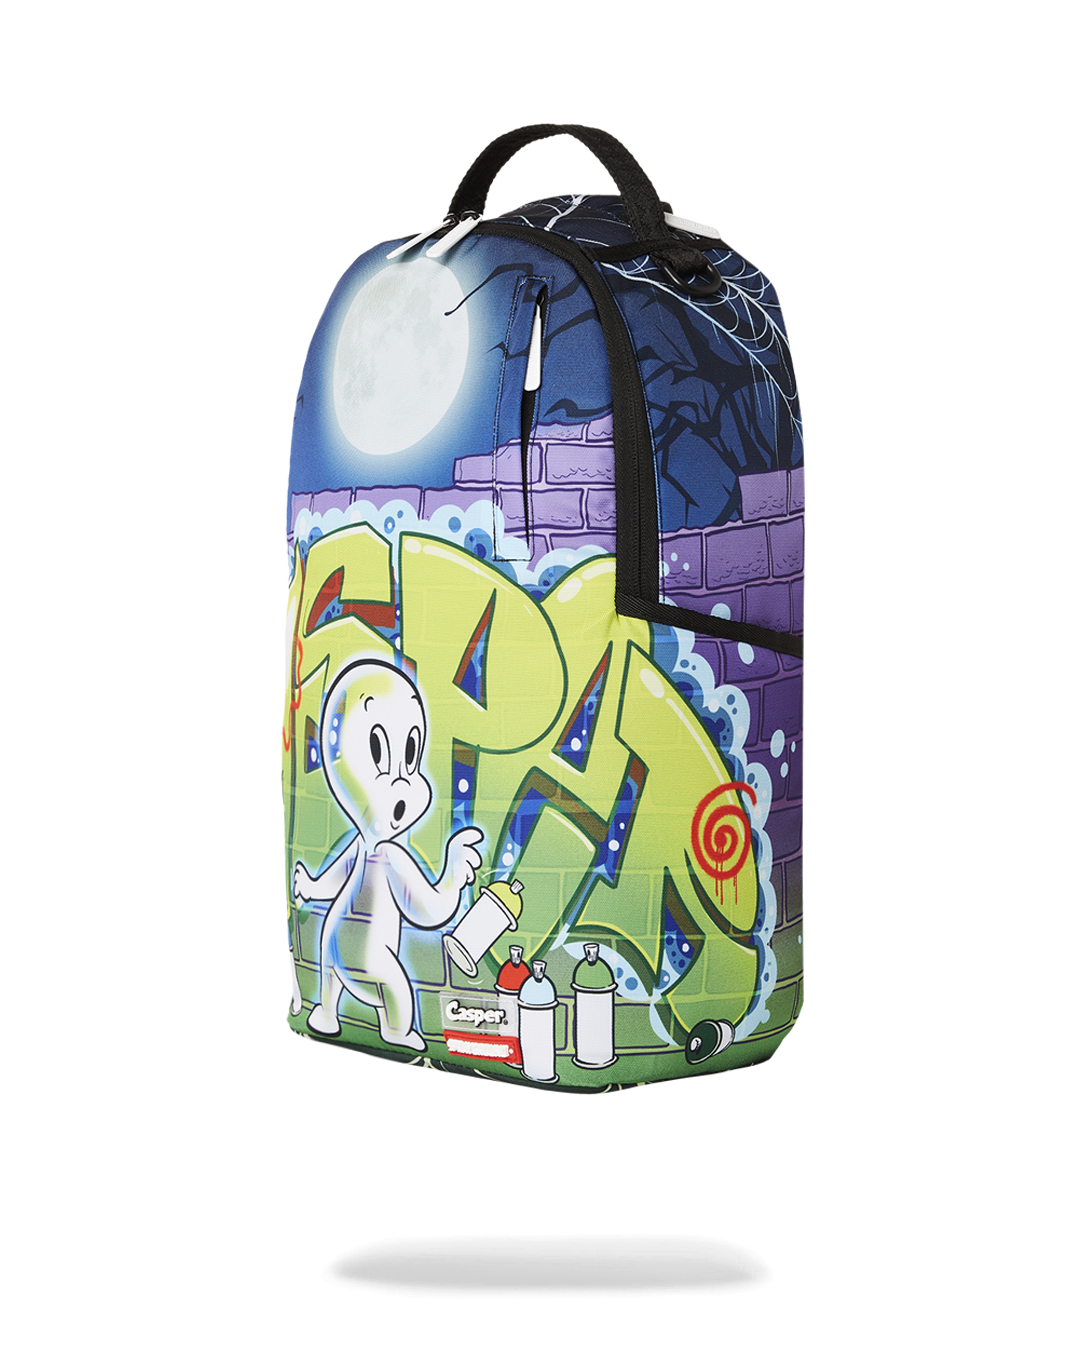 Sprayground x Casper The Friendly Ghost Ghostly Backpack